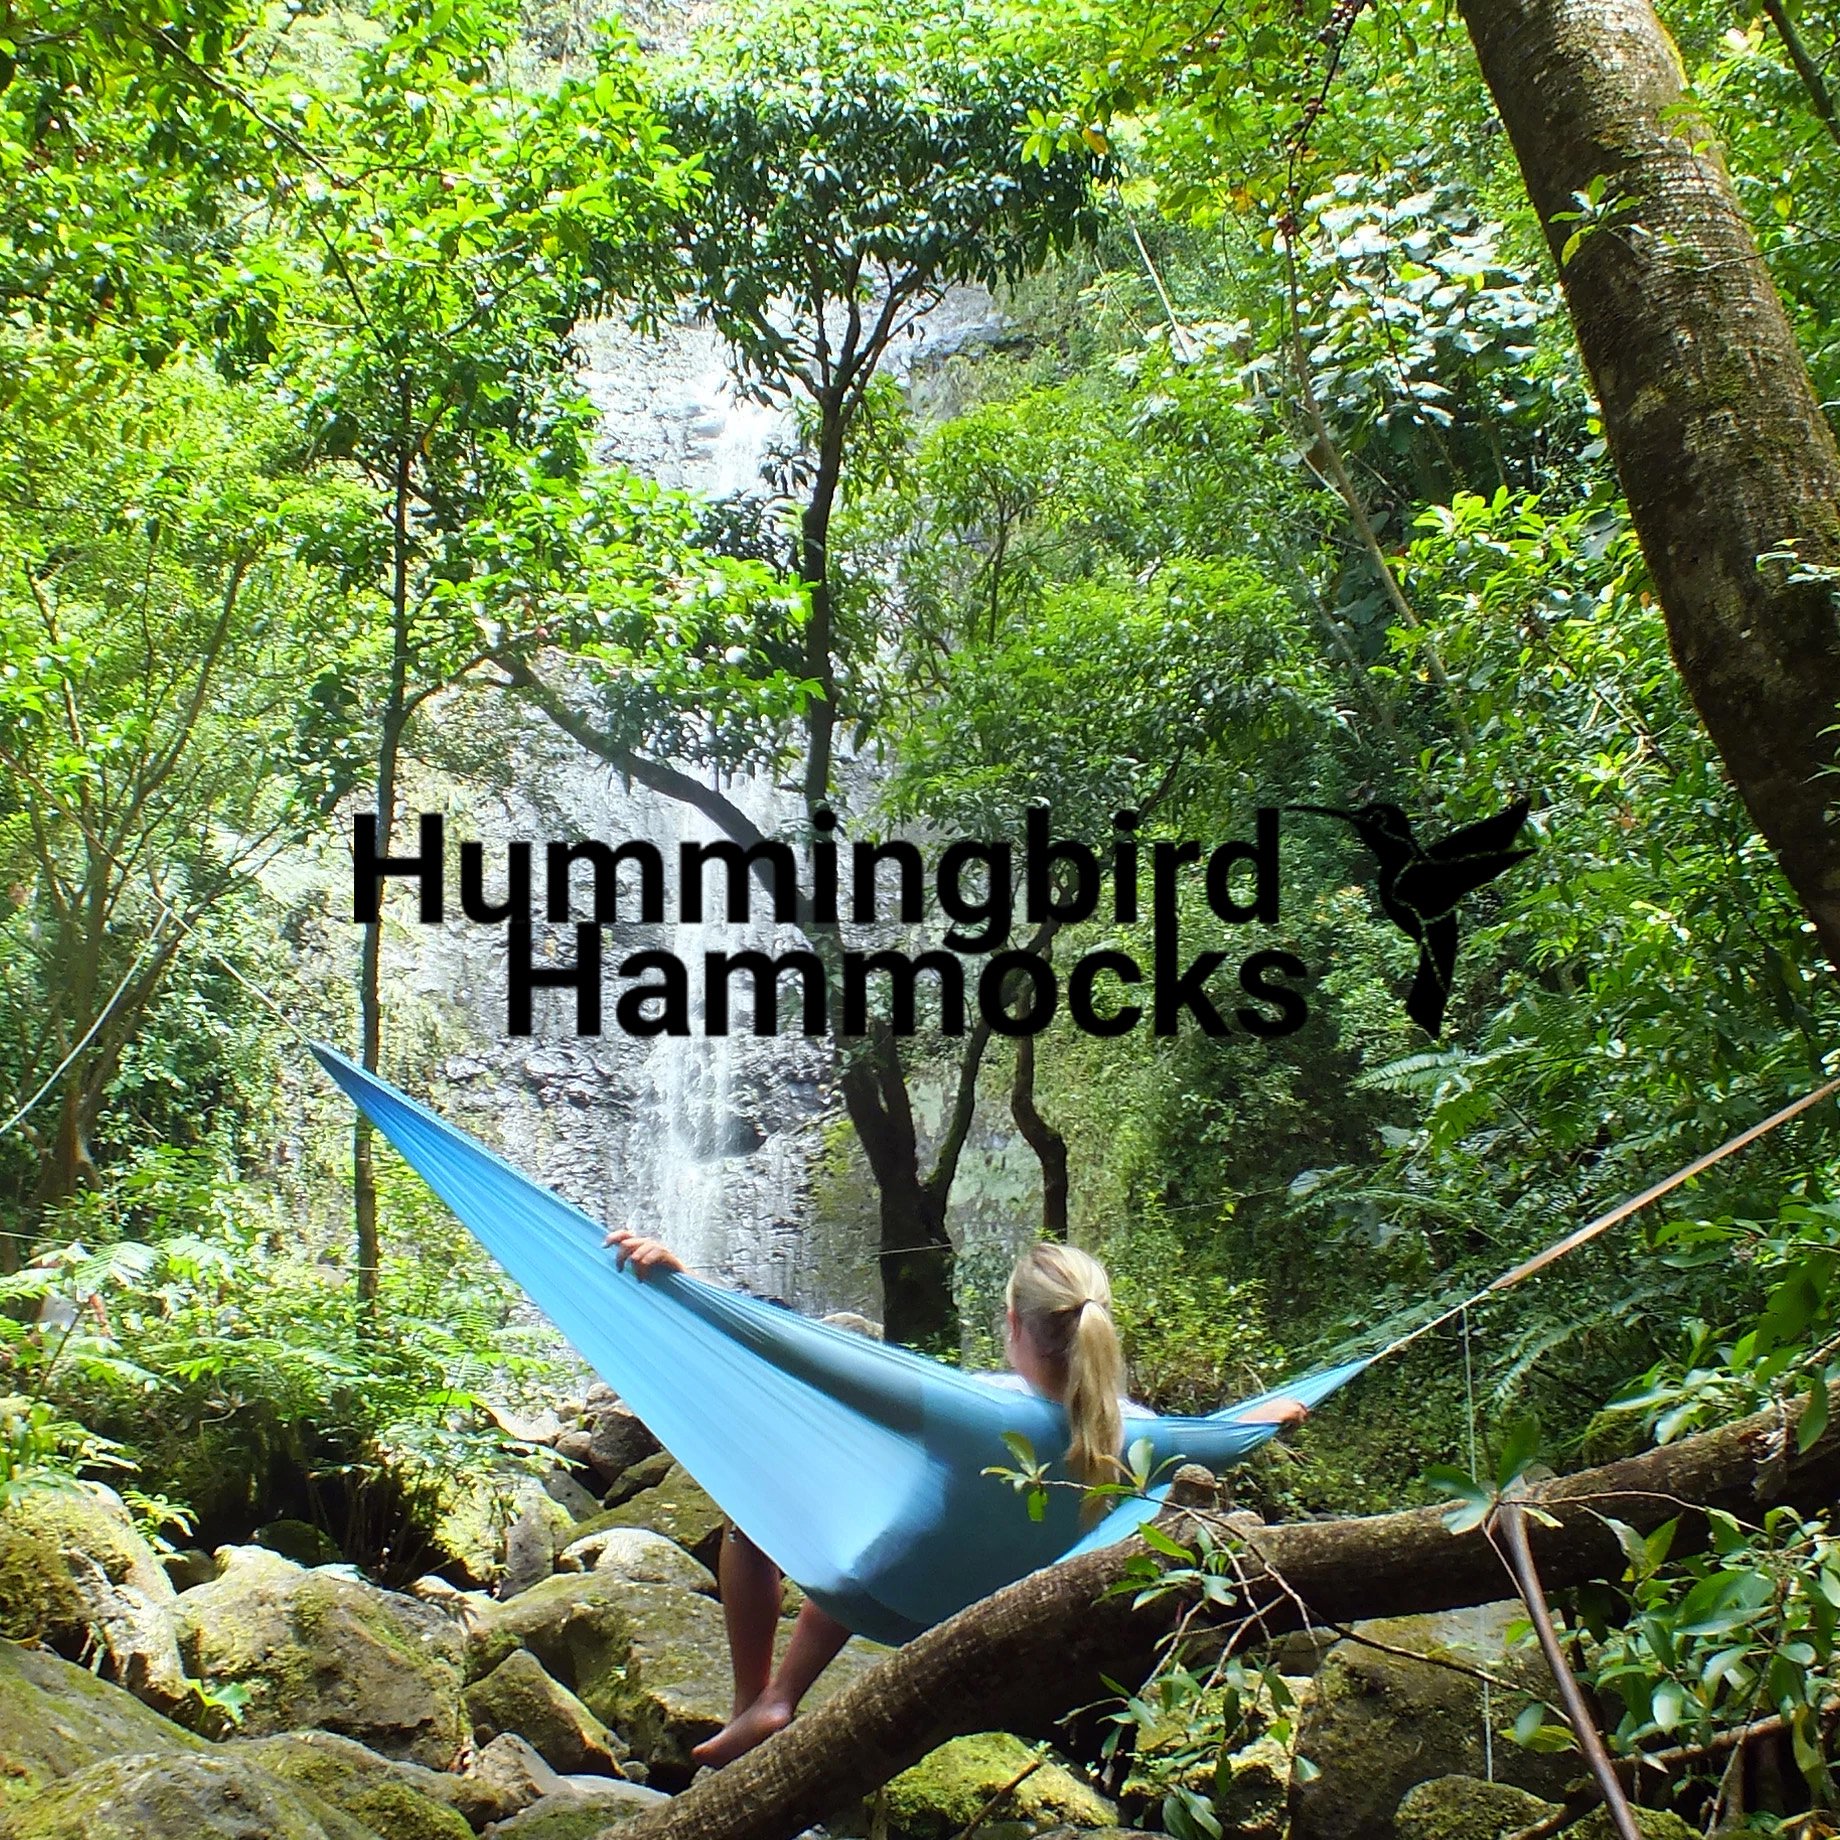 Hummingbird Hammocks ハミングバードハンモック ハンモック 世界最 